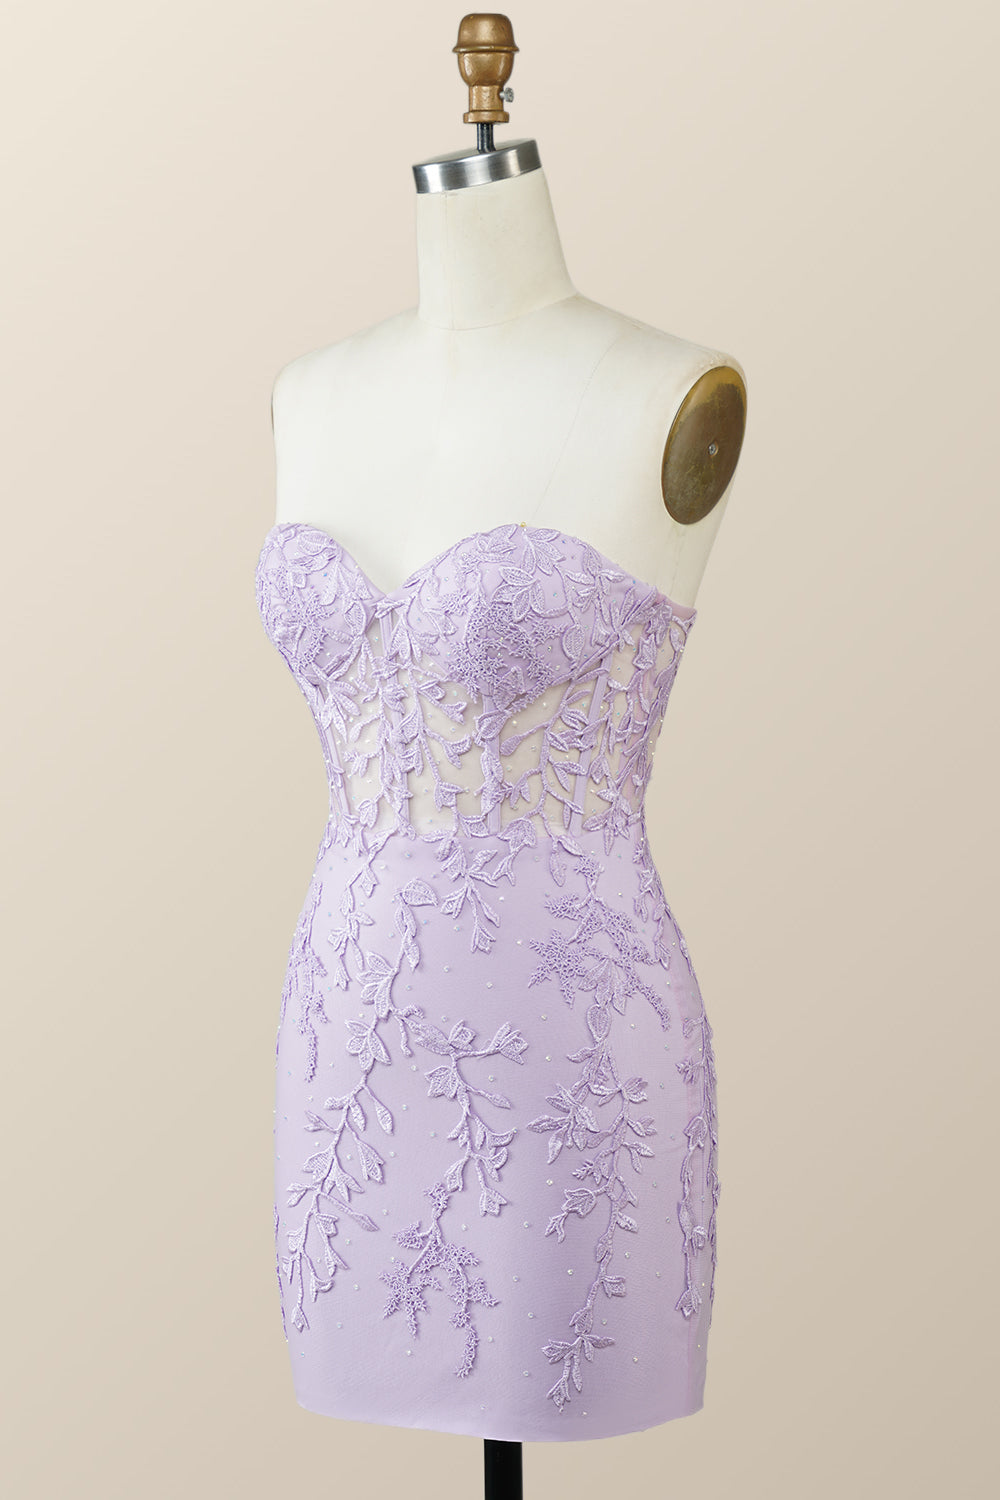 Fuchsia Lace Appliques Tight Mini Dress - Ohmollydress